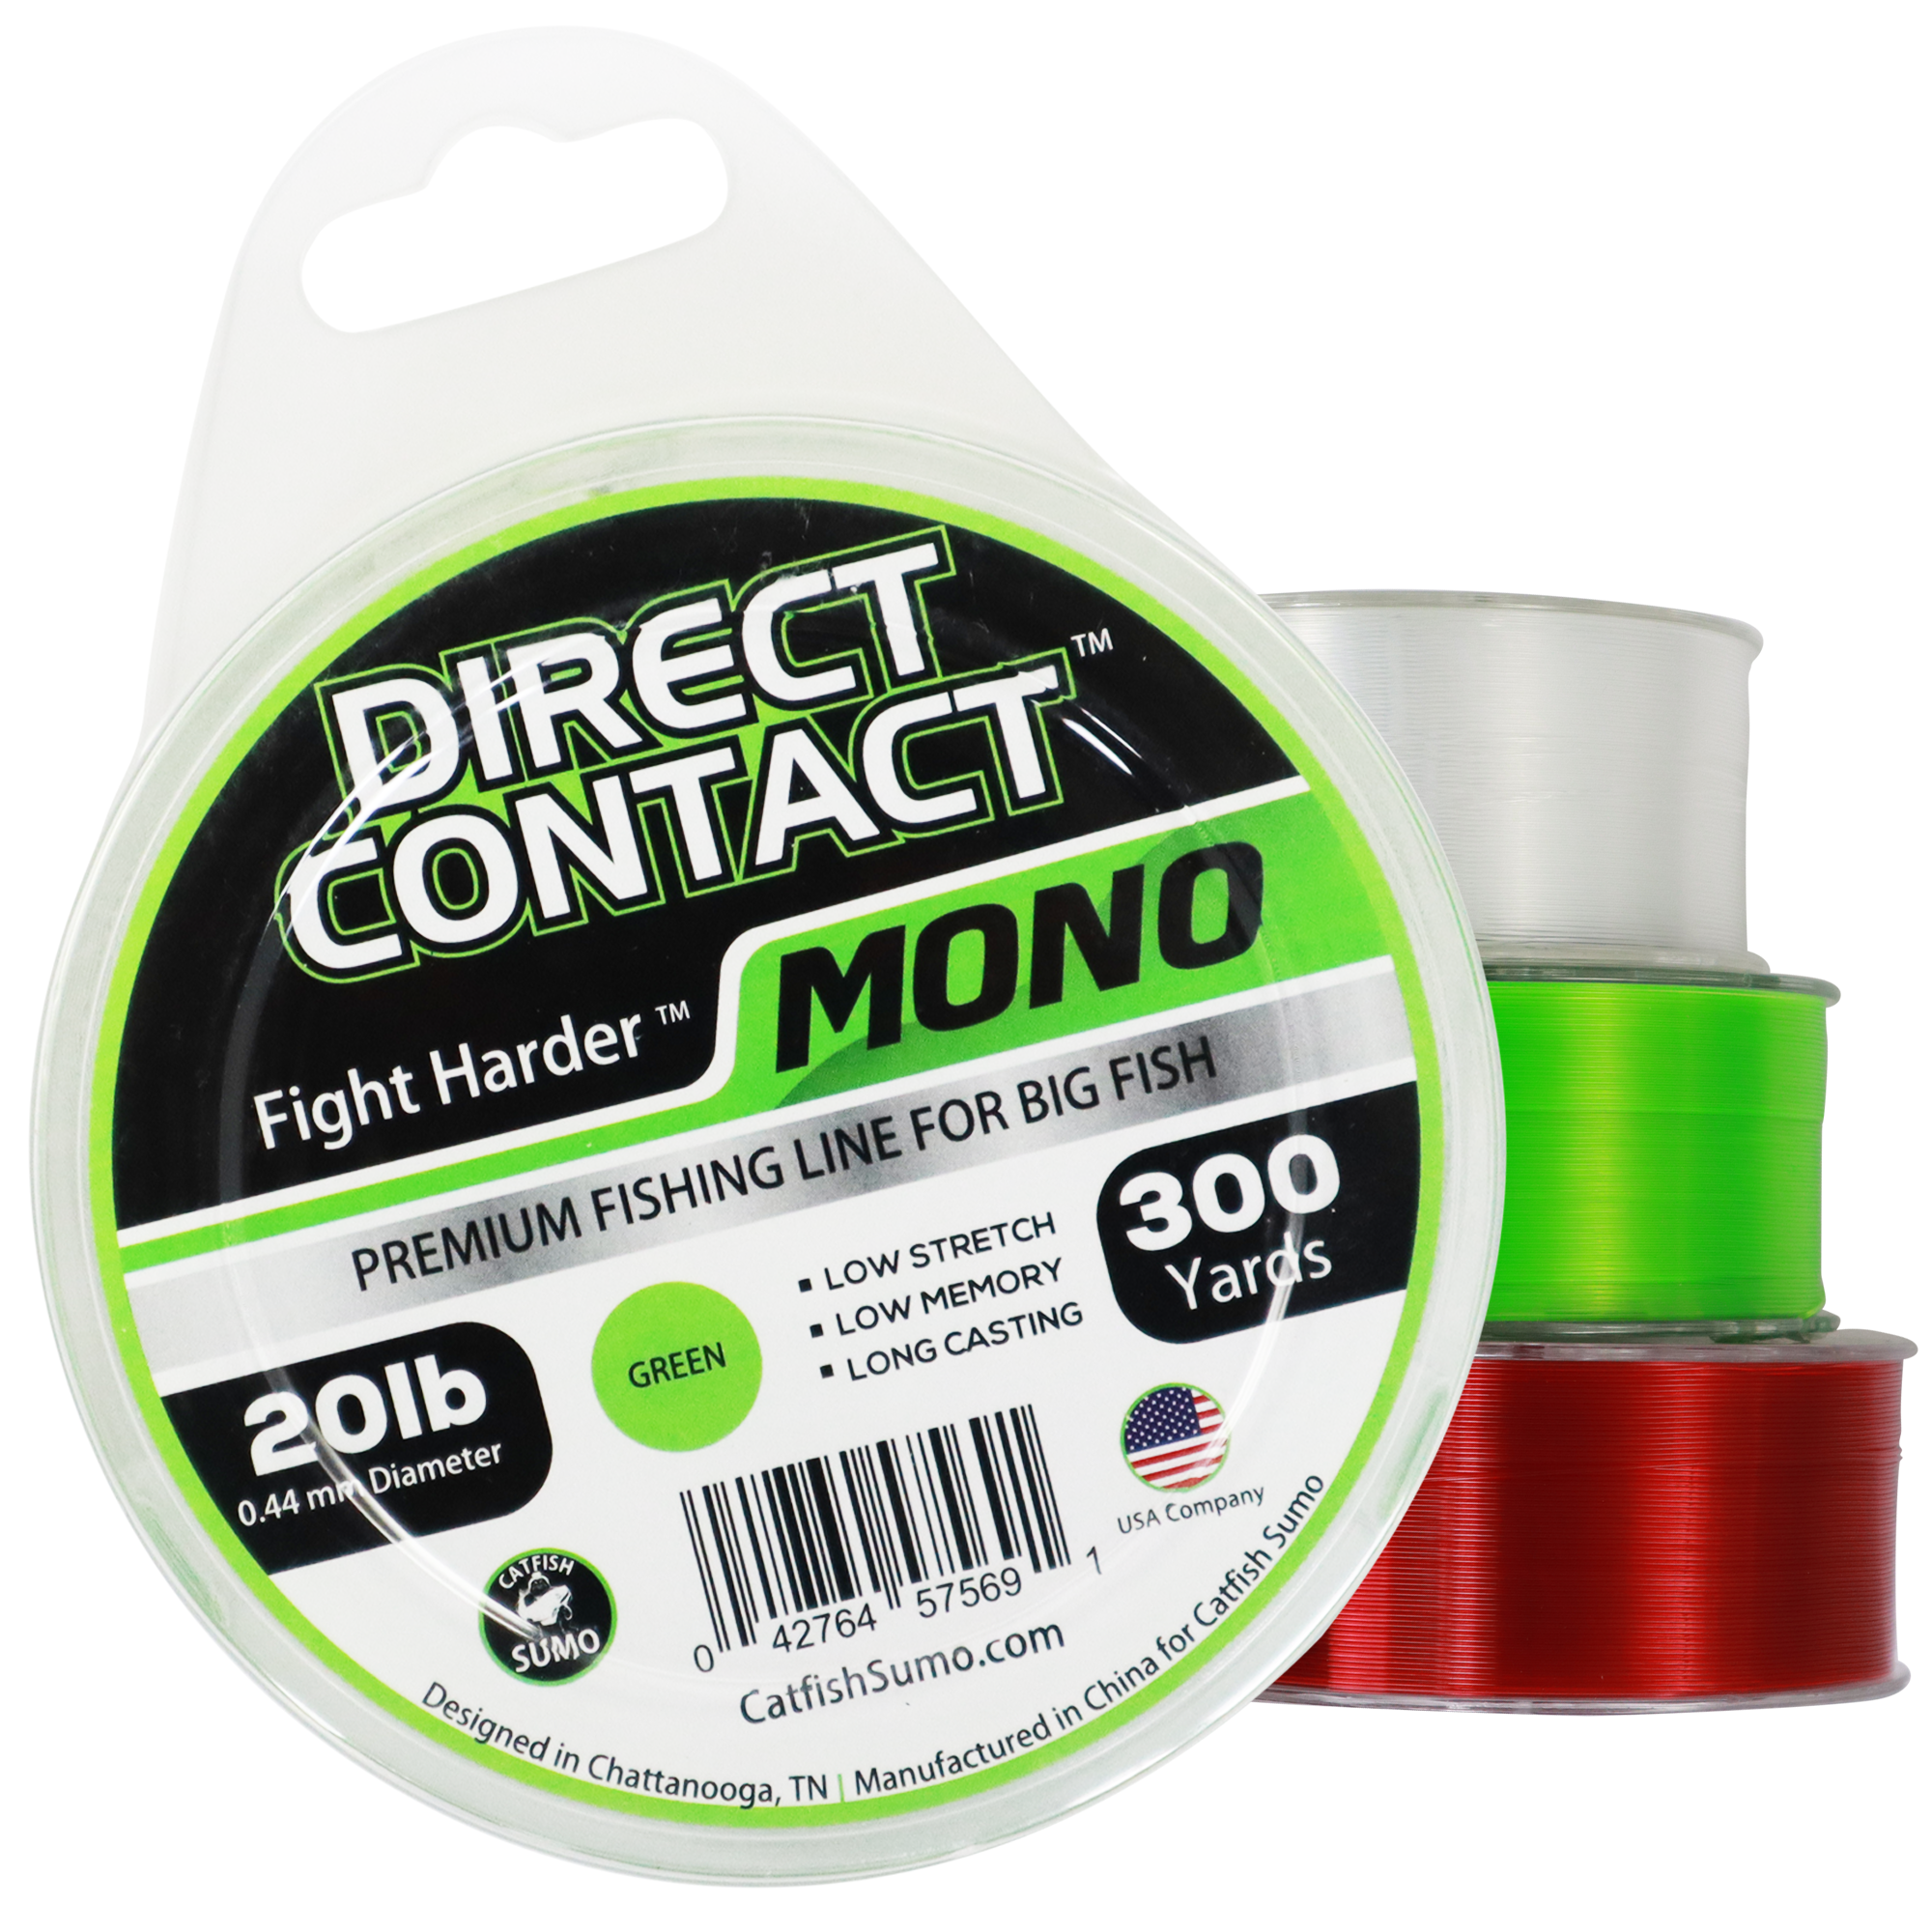 Direct Contact Premium Fishing Line for Big Fish, Mono, 300 Yard Spool 20lb / Sumo Green